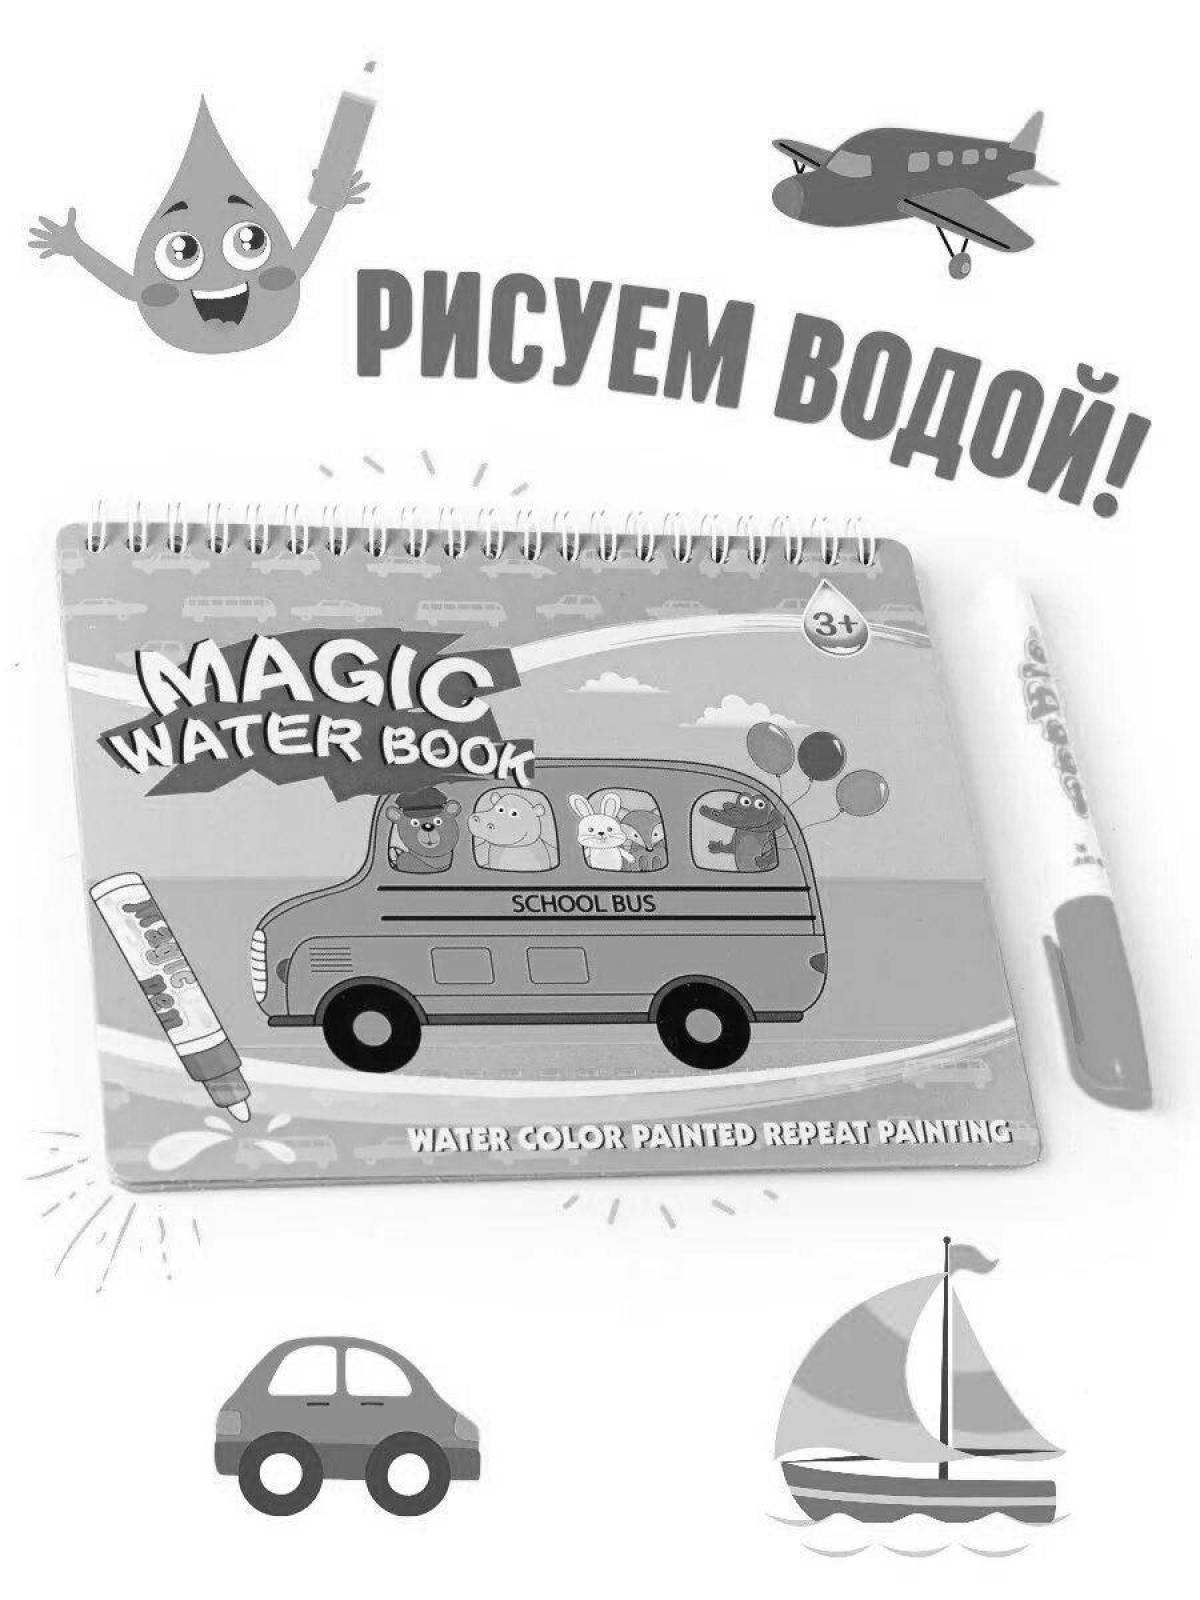 Amazing aquatic children's reusable coloring book